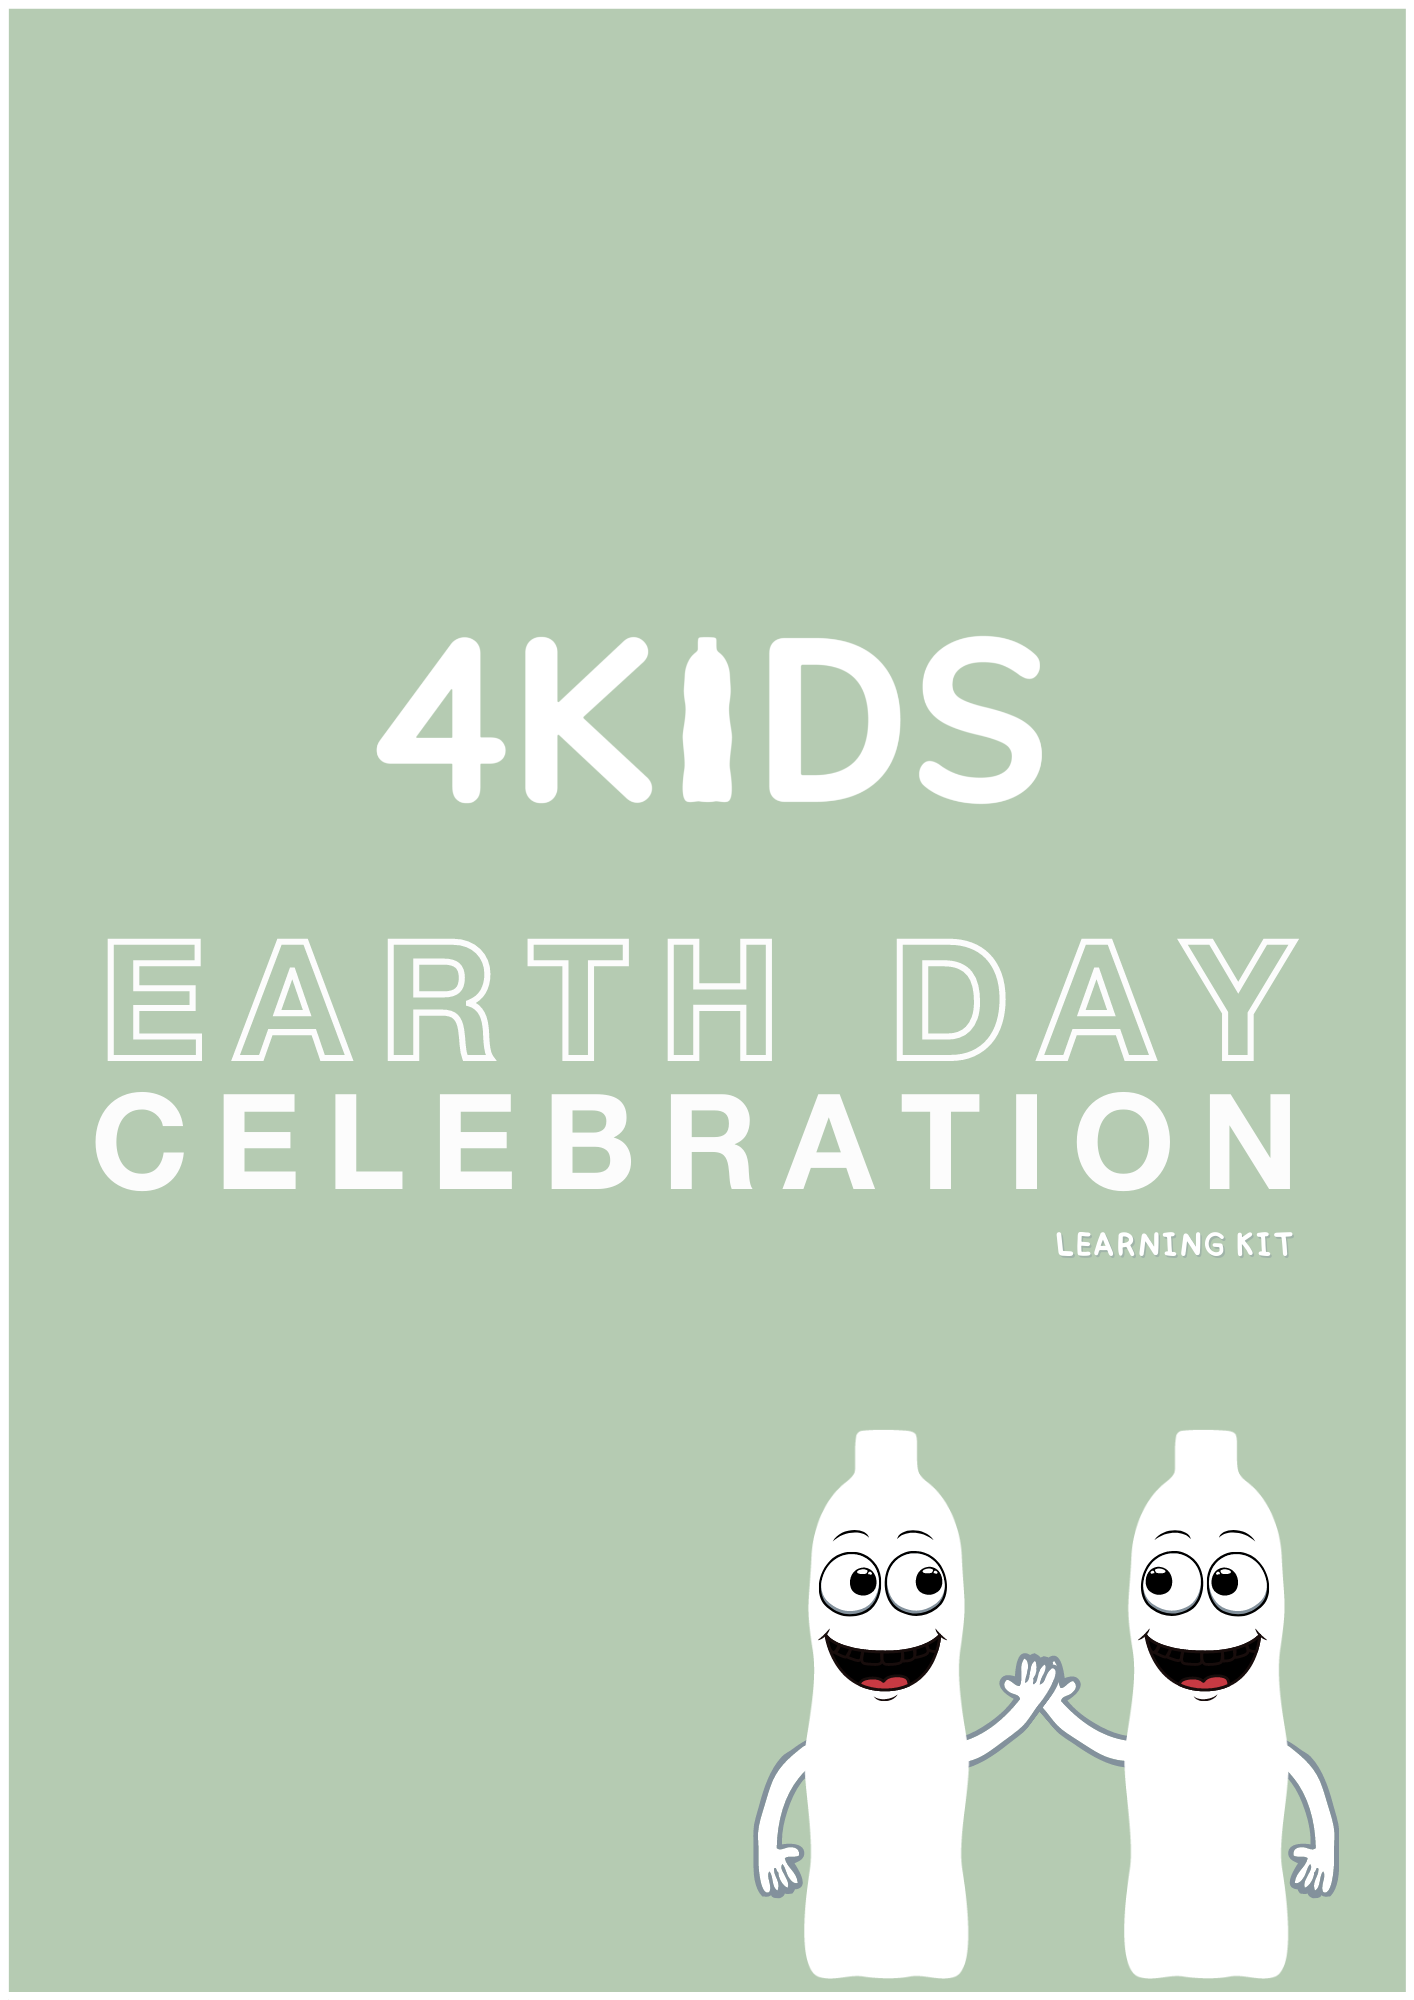 Earth Day Celebration 4KIDS